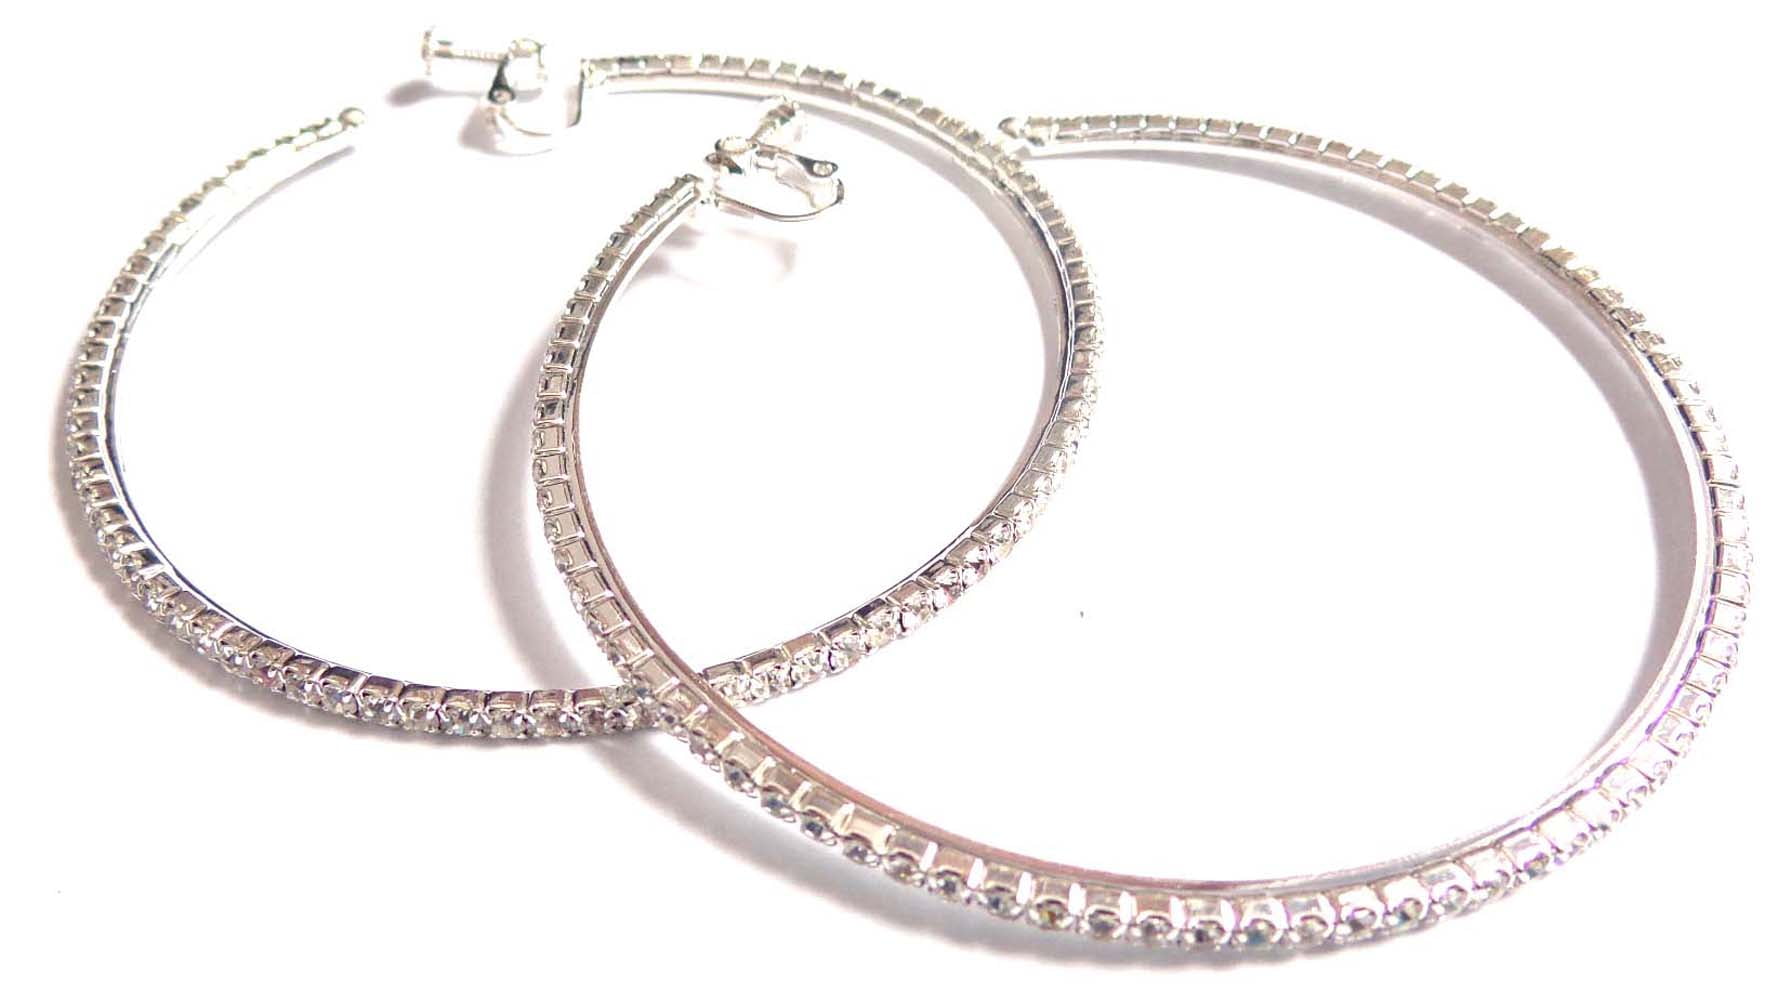 Crystal Iridescent Rhinestone Earrings 2 inch Hoop Silver Rhodium Thin Hoops 